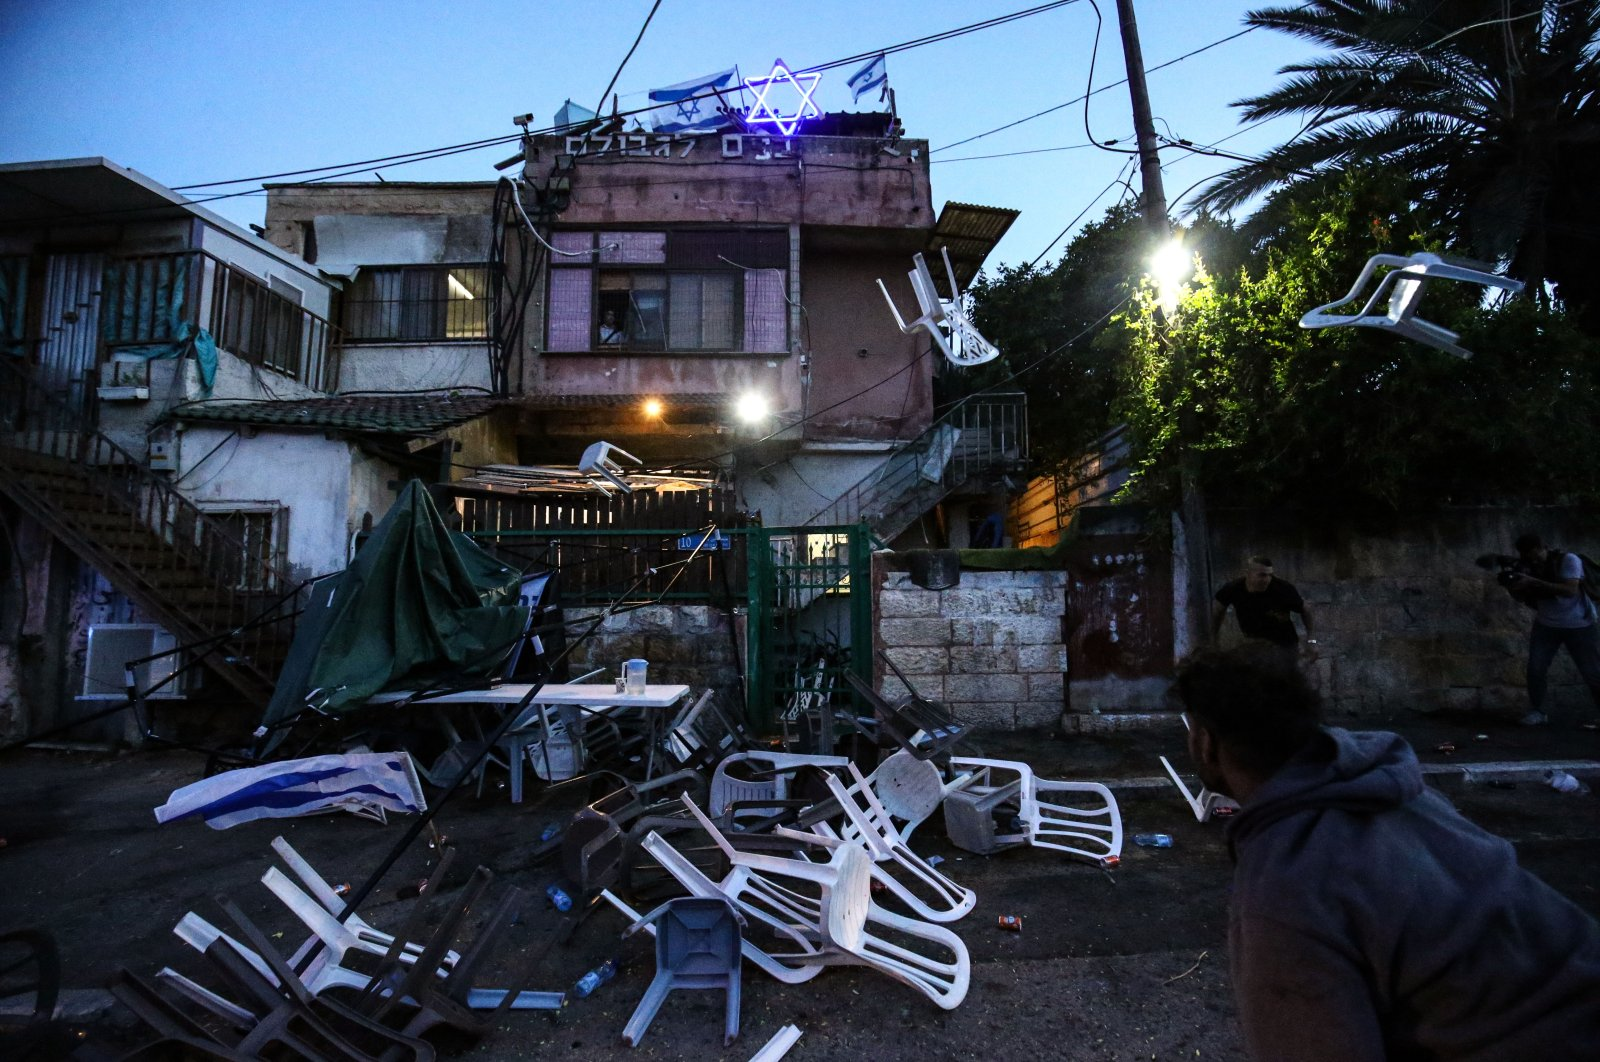 Israeli settlers attack Palestinians during iftar in Sheikh Jarrah